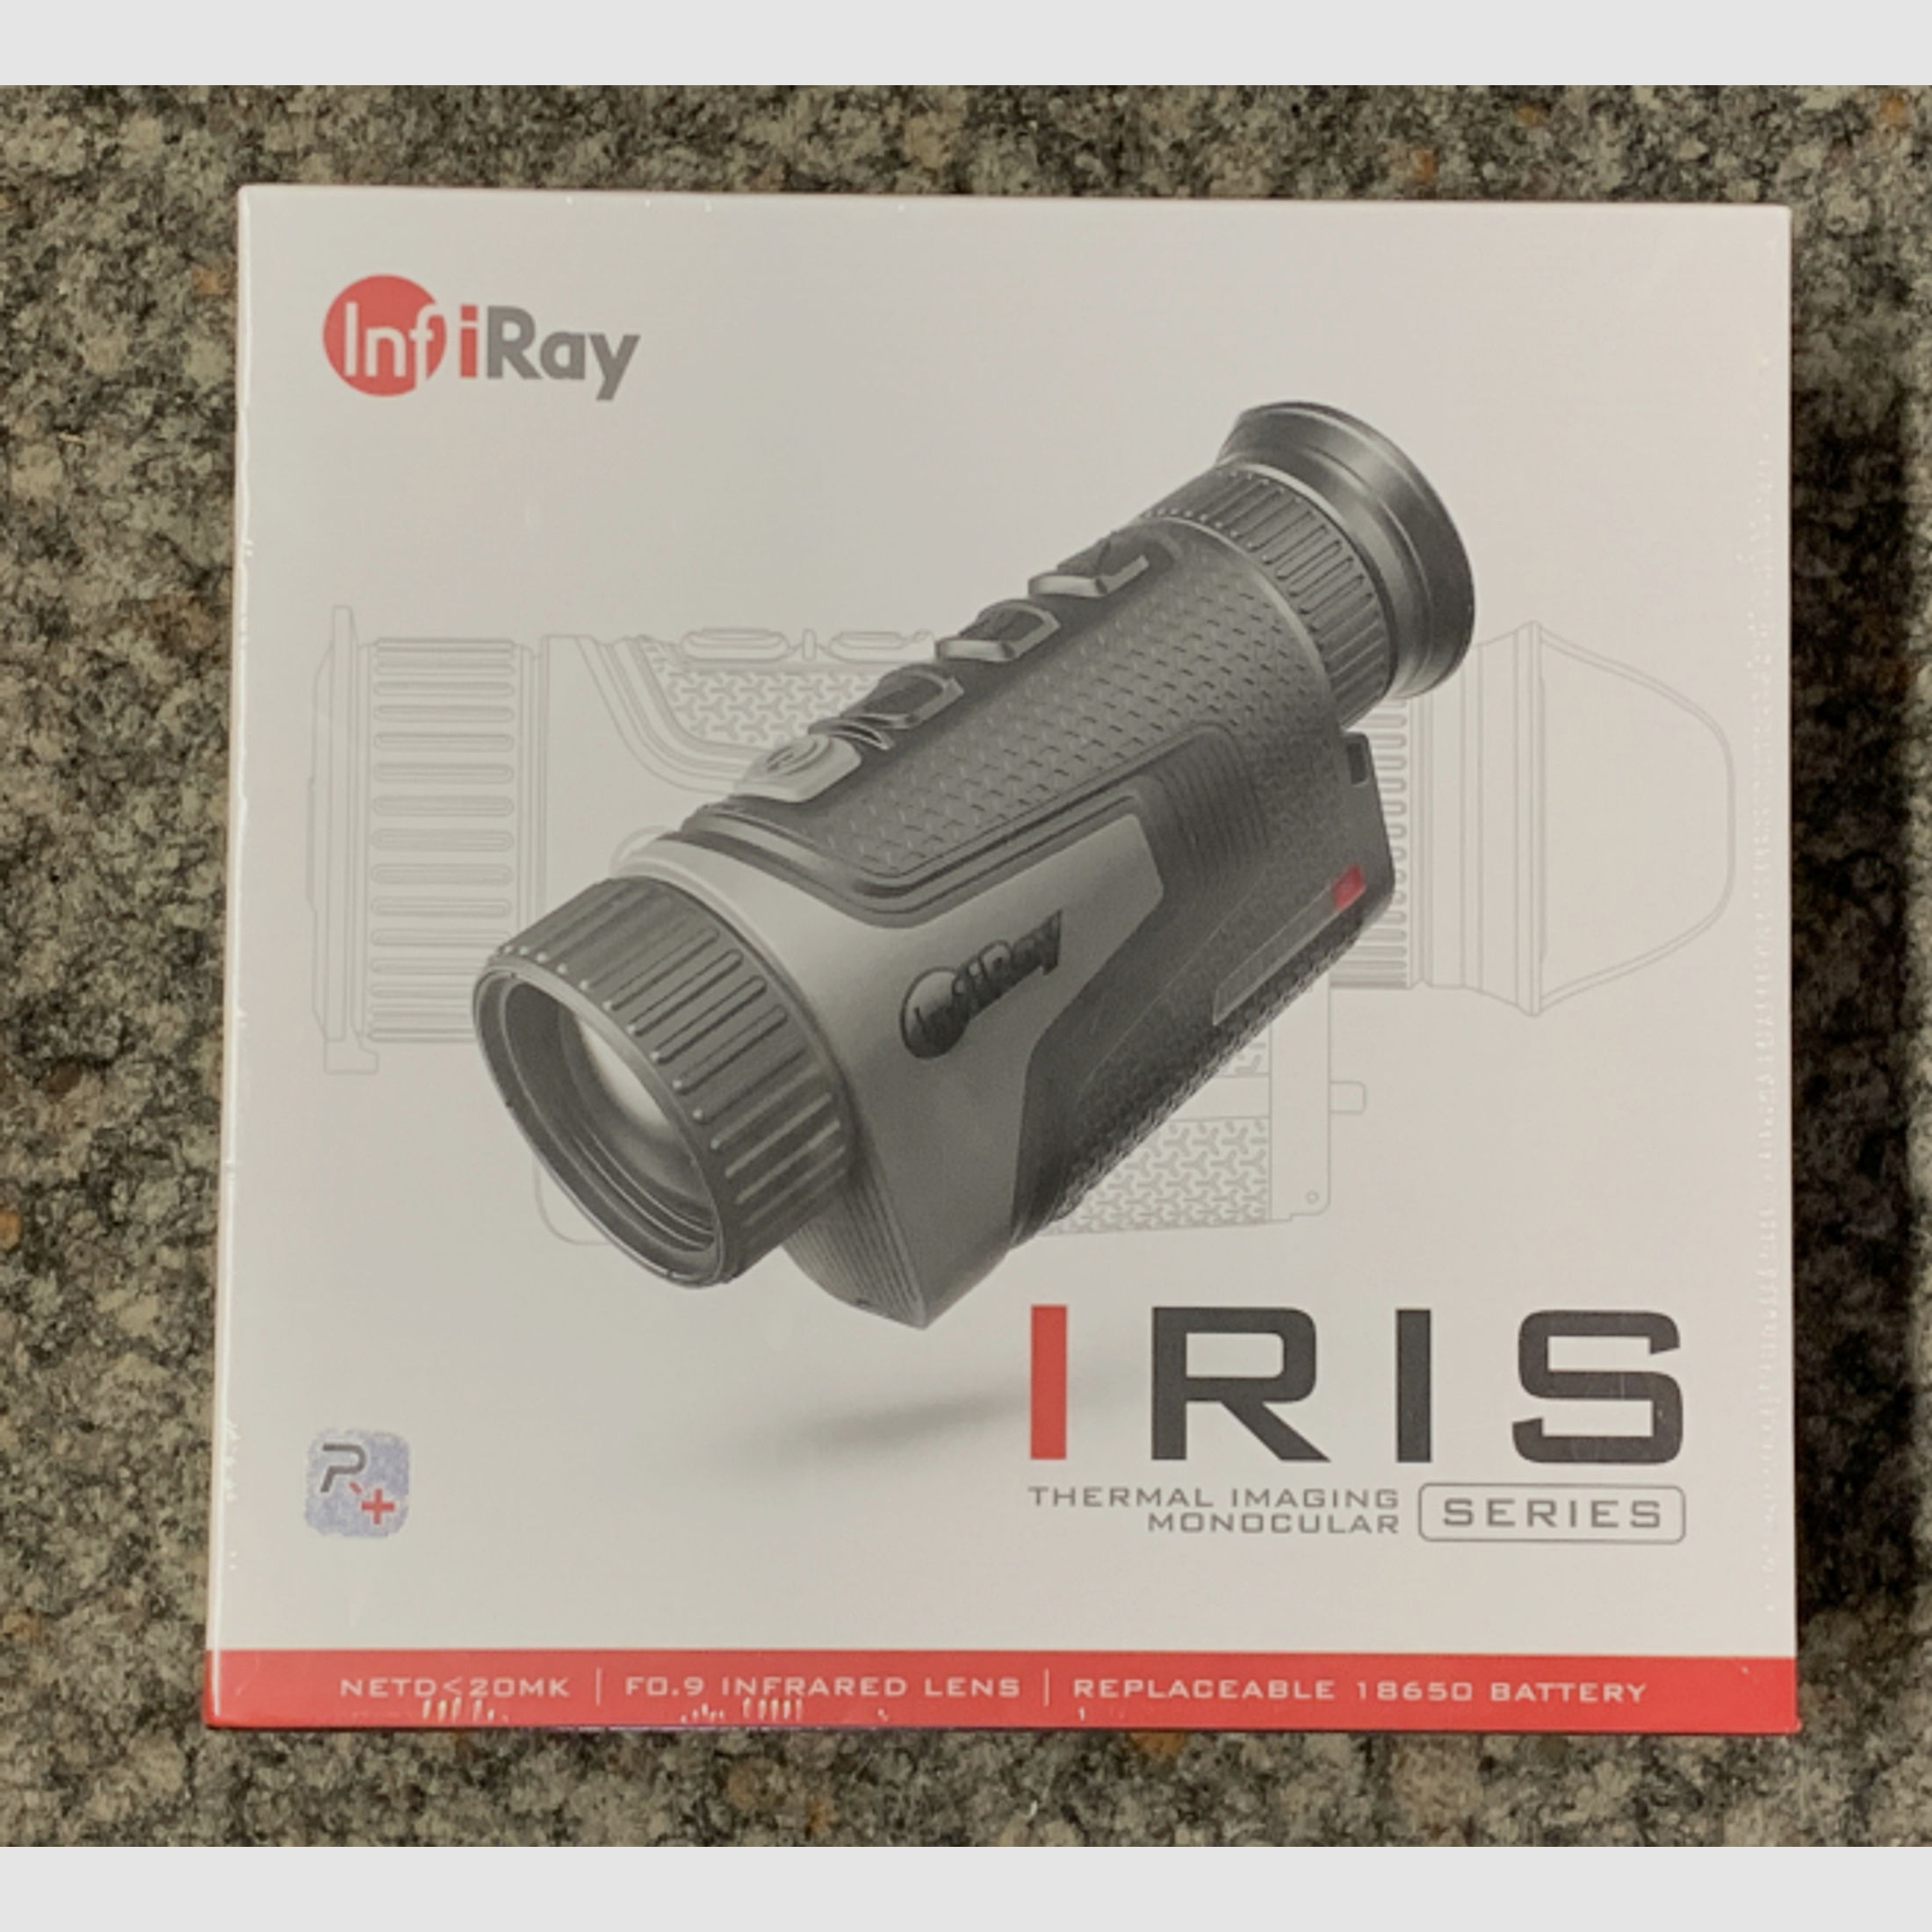 Neuware---Infiray IRIS IL35 Wärmebildkamera 384x288 Sensor, 12 micrometer Pixel